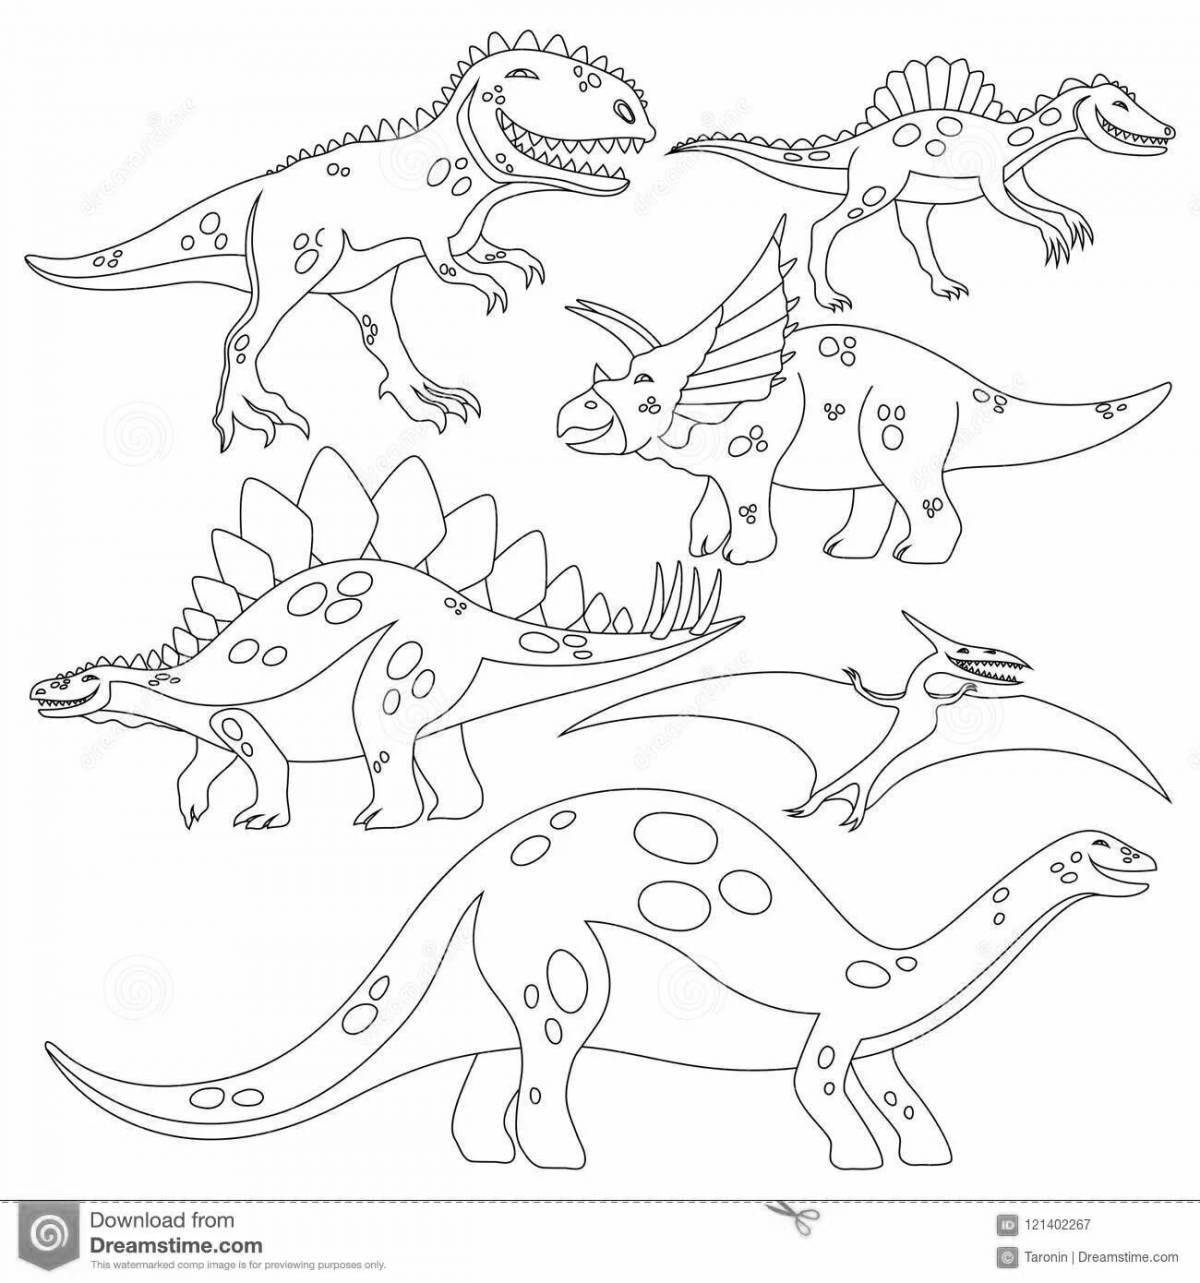 Dinosaurs lot #9